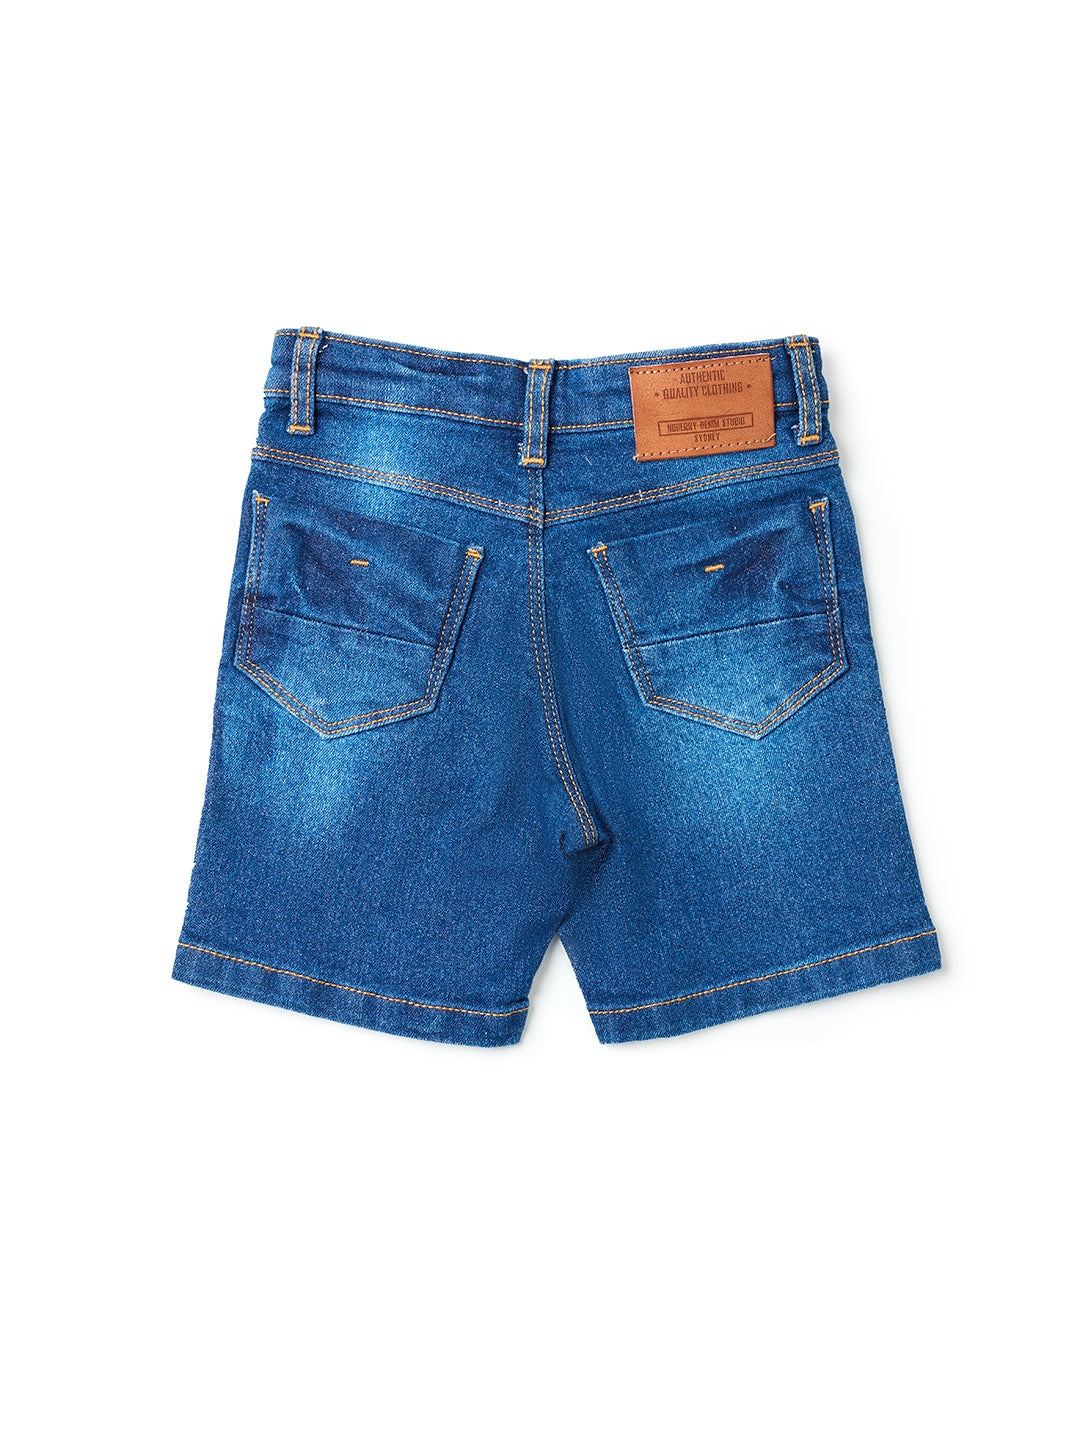 Nuberry Boys Denim Shorts - Mid Blue